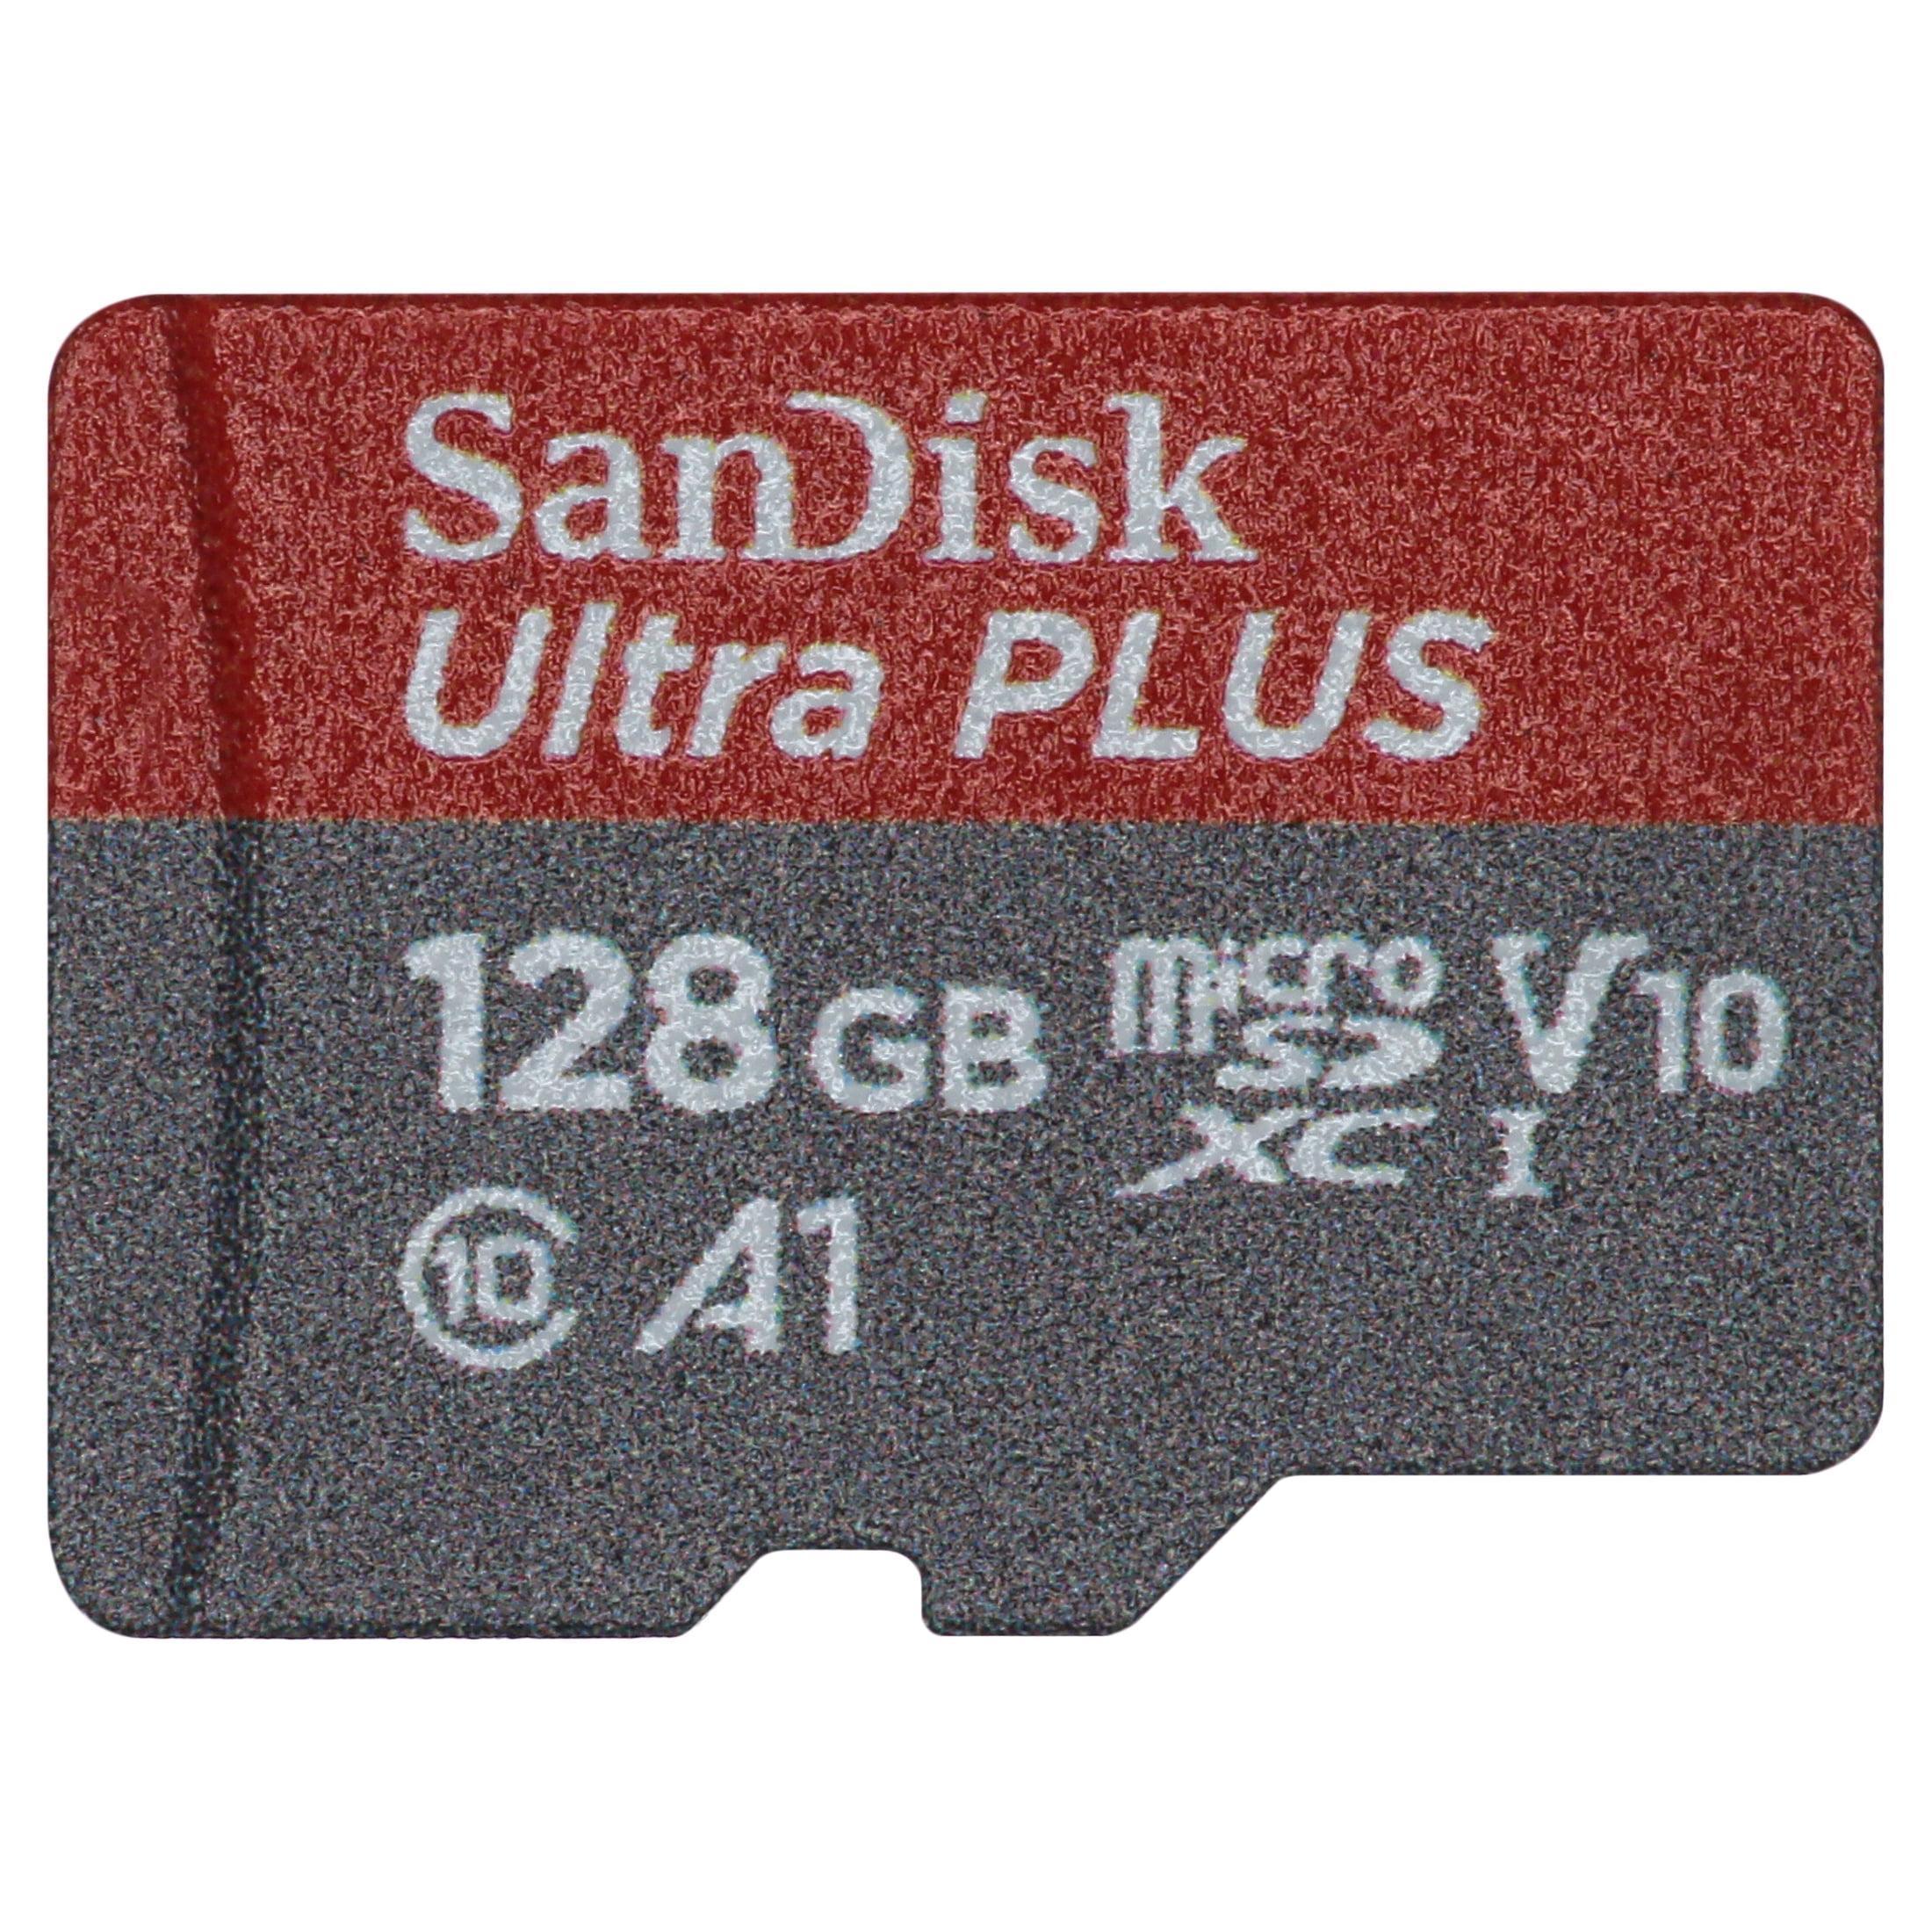 SanDisk Ultra PLUS 128GB SDXC UHS-I Memory Card SDSDUWC-128G-AN6IN